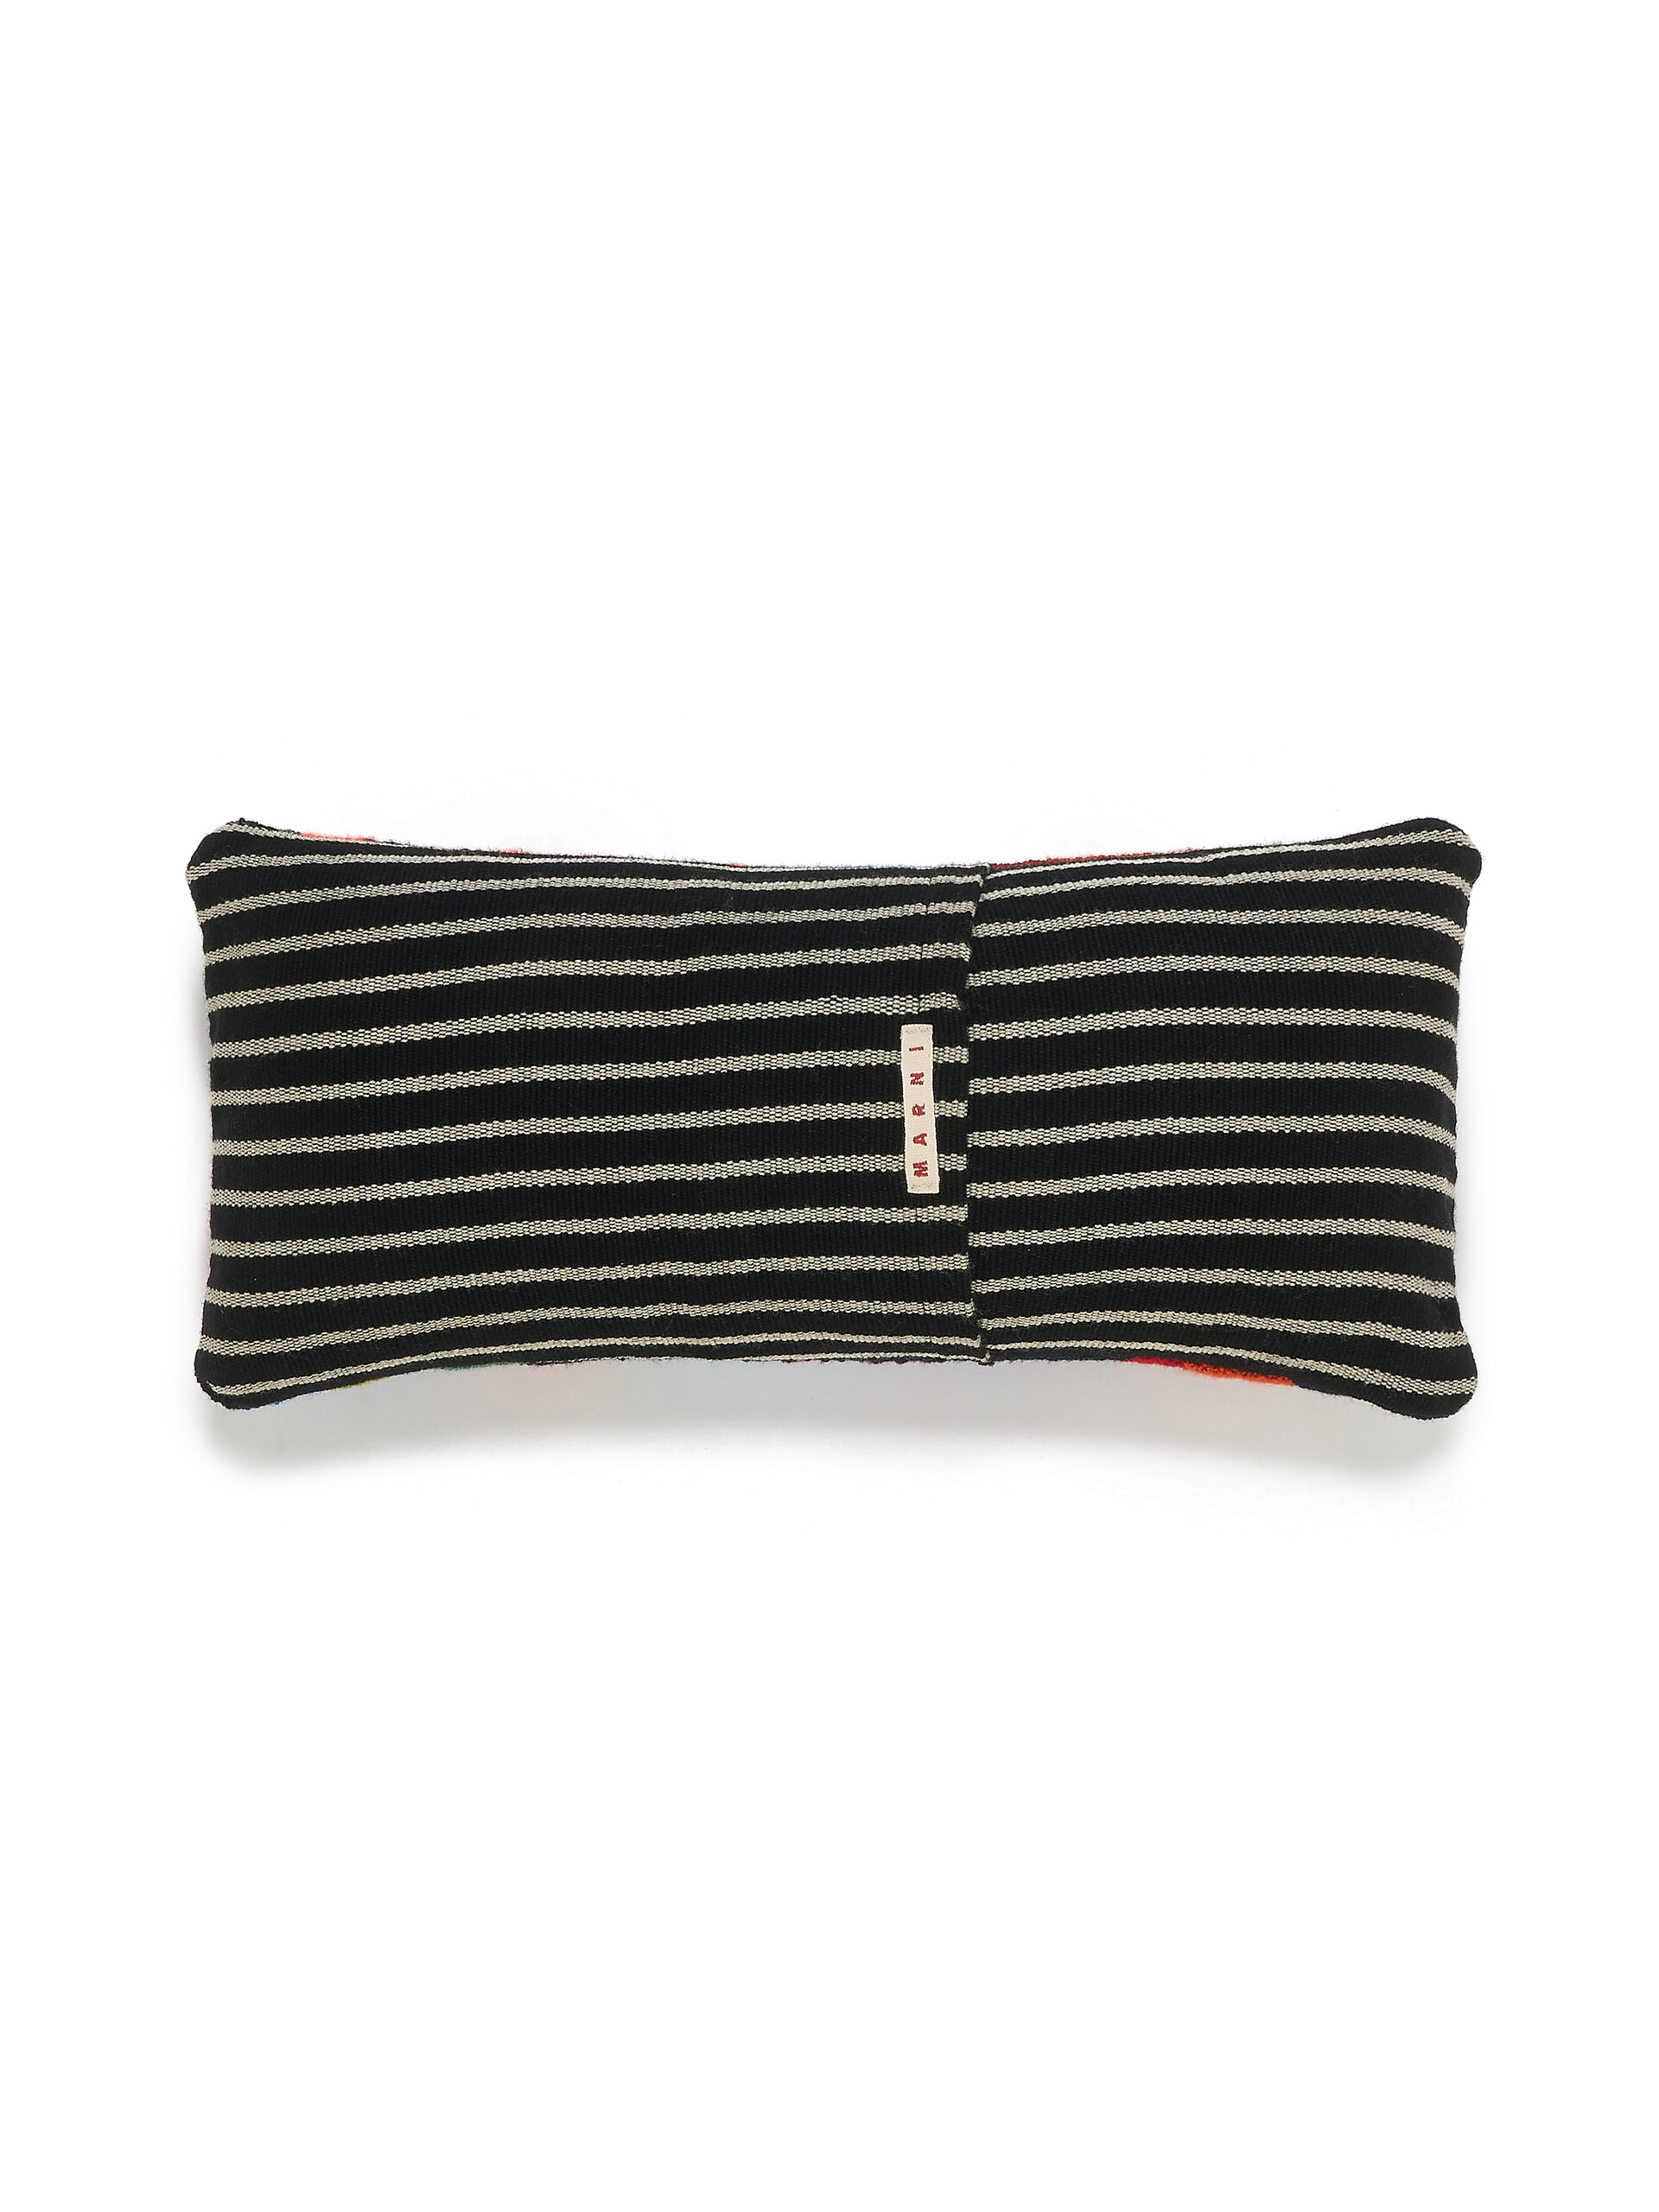 MARNI MARKET patterned cushion cover - Furniture - Image 2